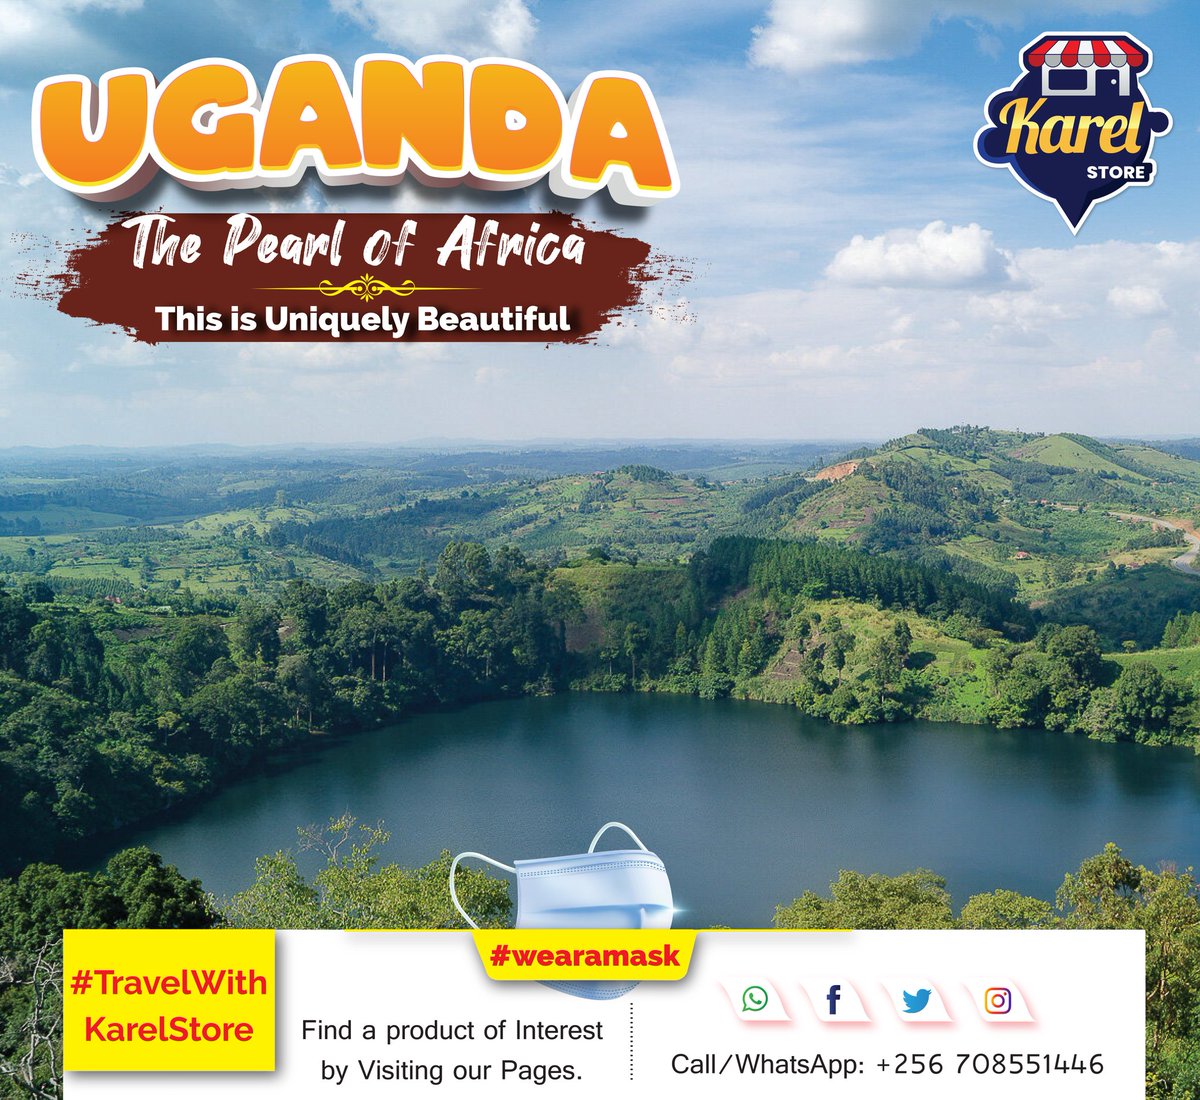 The beauty that the Pearl of Africa is!!! Uganda 🇺🇬 gifted by nature.🍁🍂✌️

@UgandaUncovered @UTAuganda @ug_tour @TourUganda1 @VisitUganda @visitKampala @visitugandaUK @UgandaSights